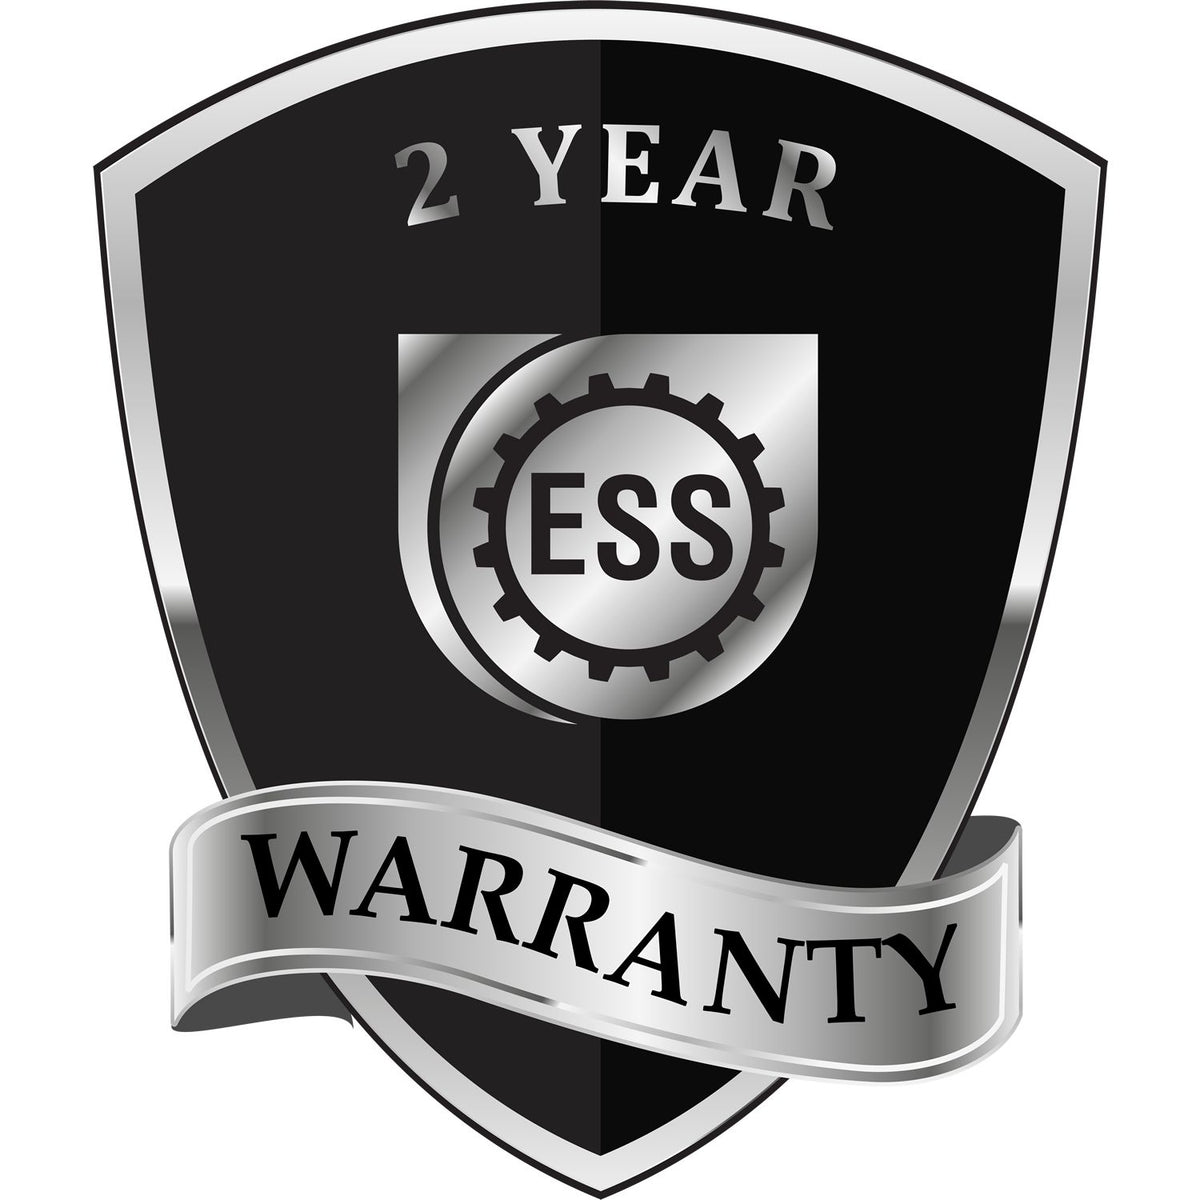 A black and silver badge or emblem showing warranty information for the Hybrid Nebraska Architect Seal